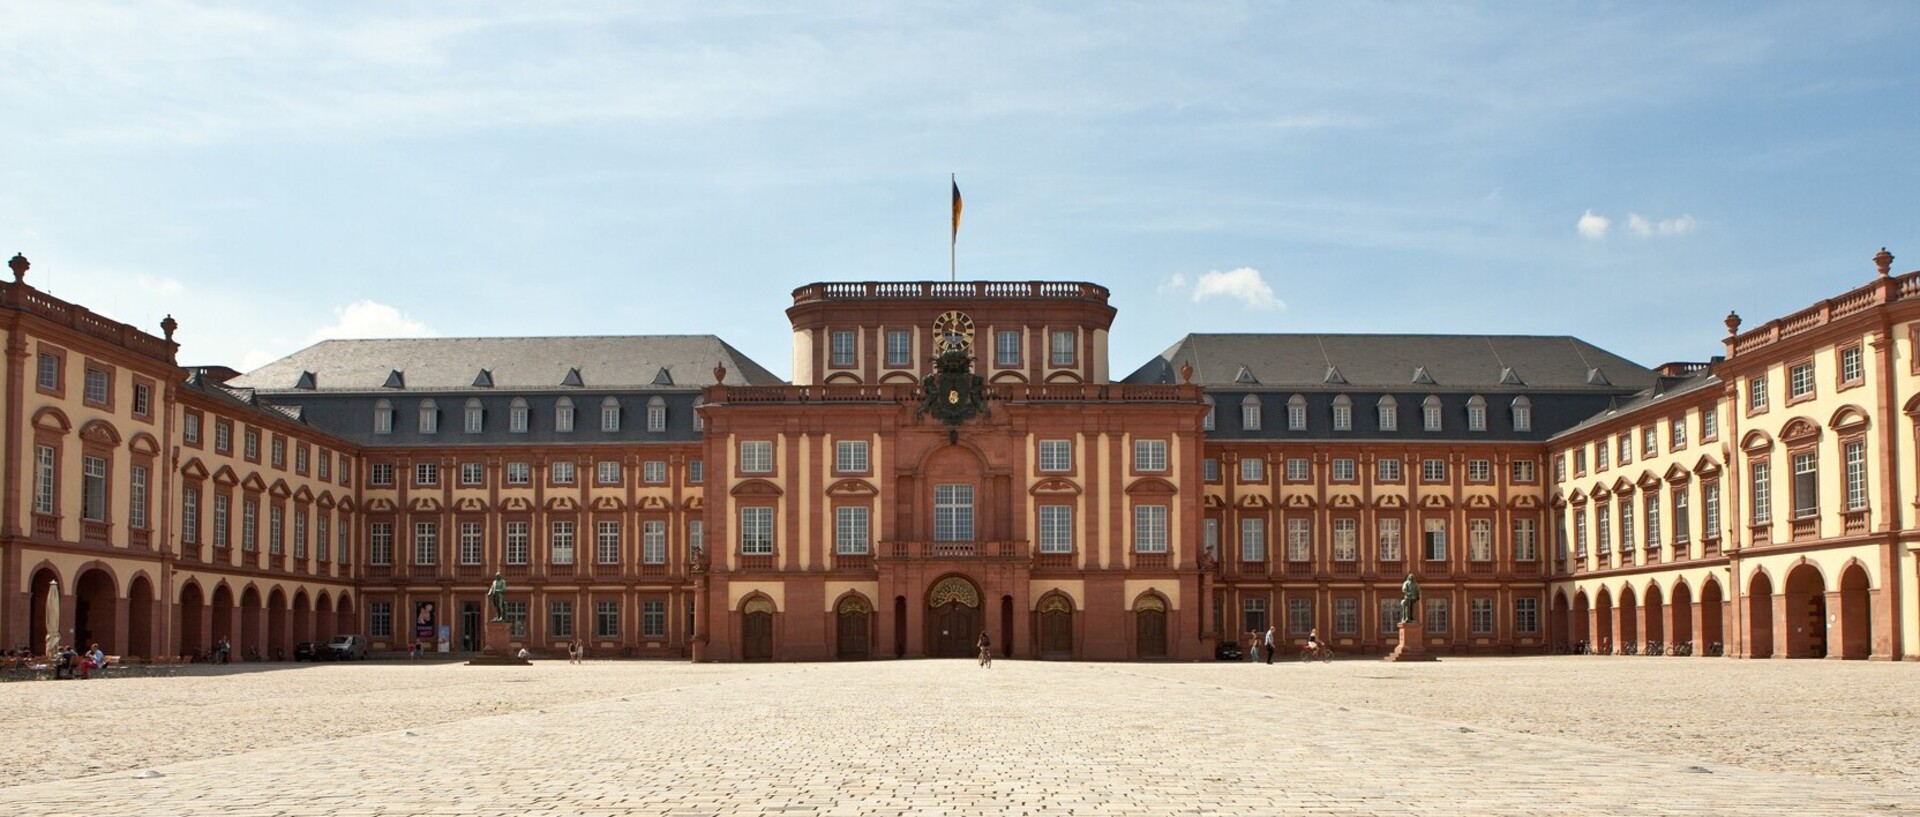 The Barockschloss and the Ehrenhof in Mannheim.